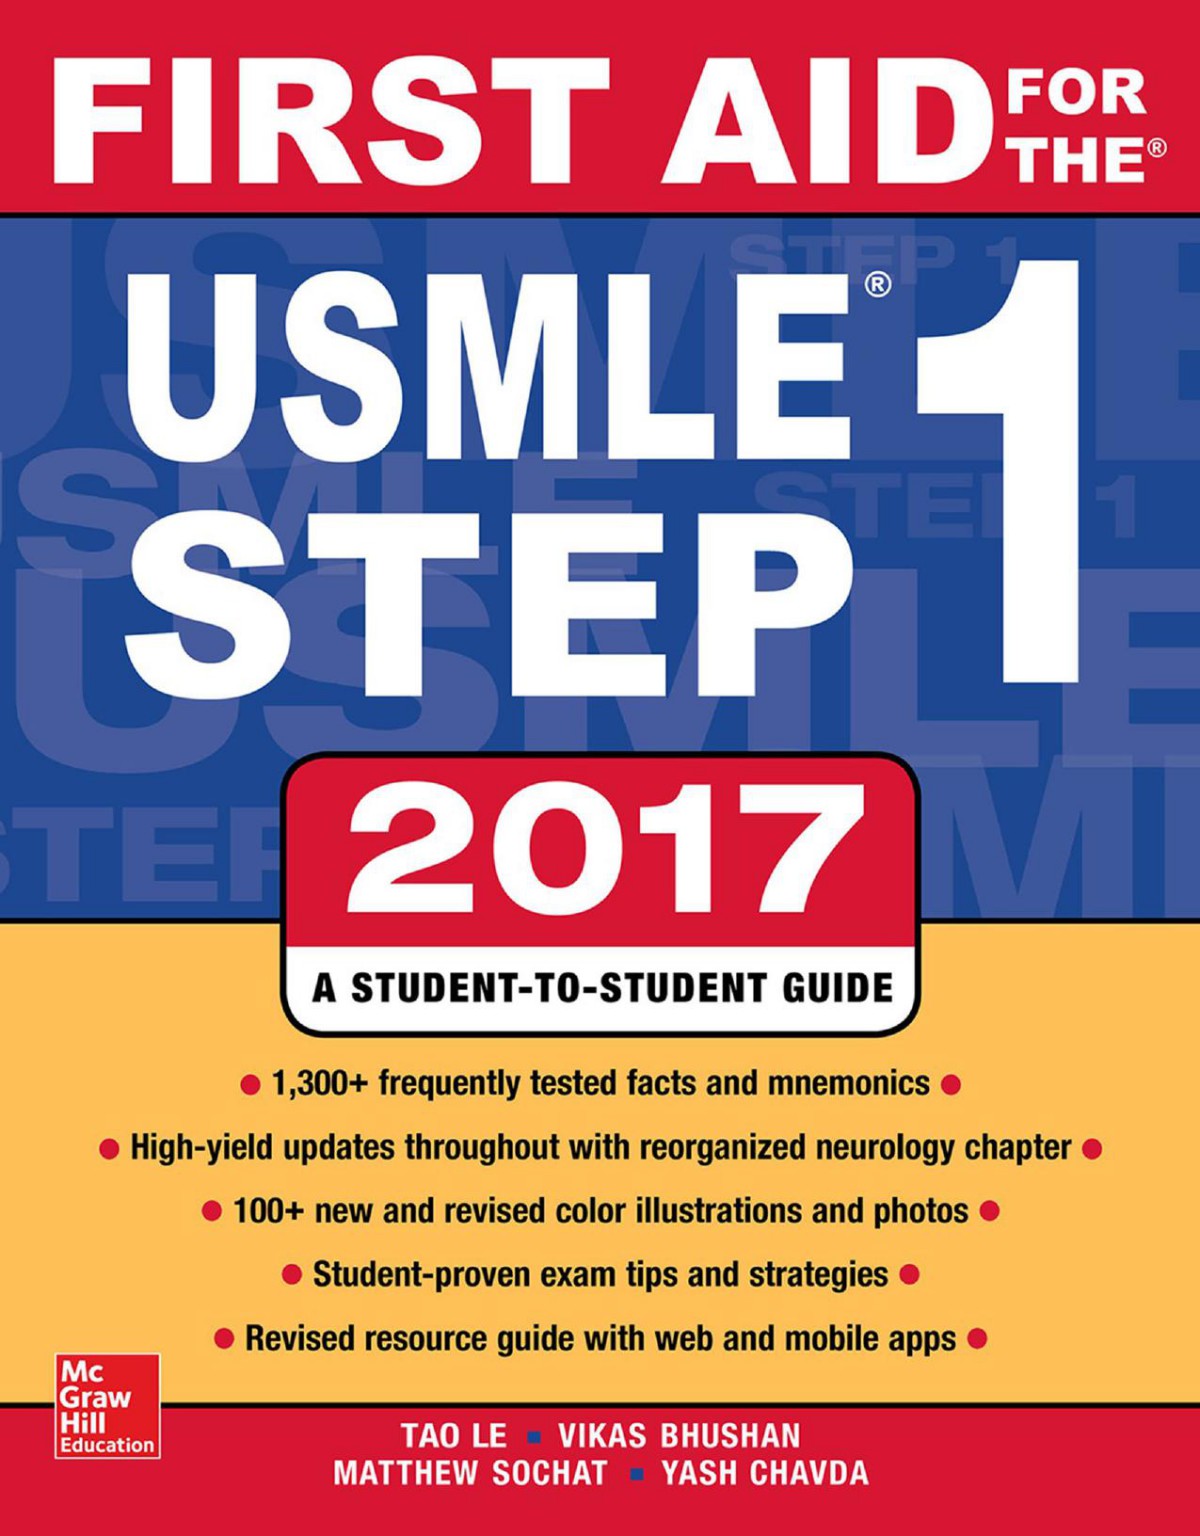 First Aid USMLE STEP 1 2017